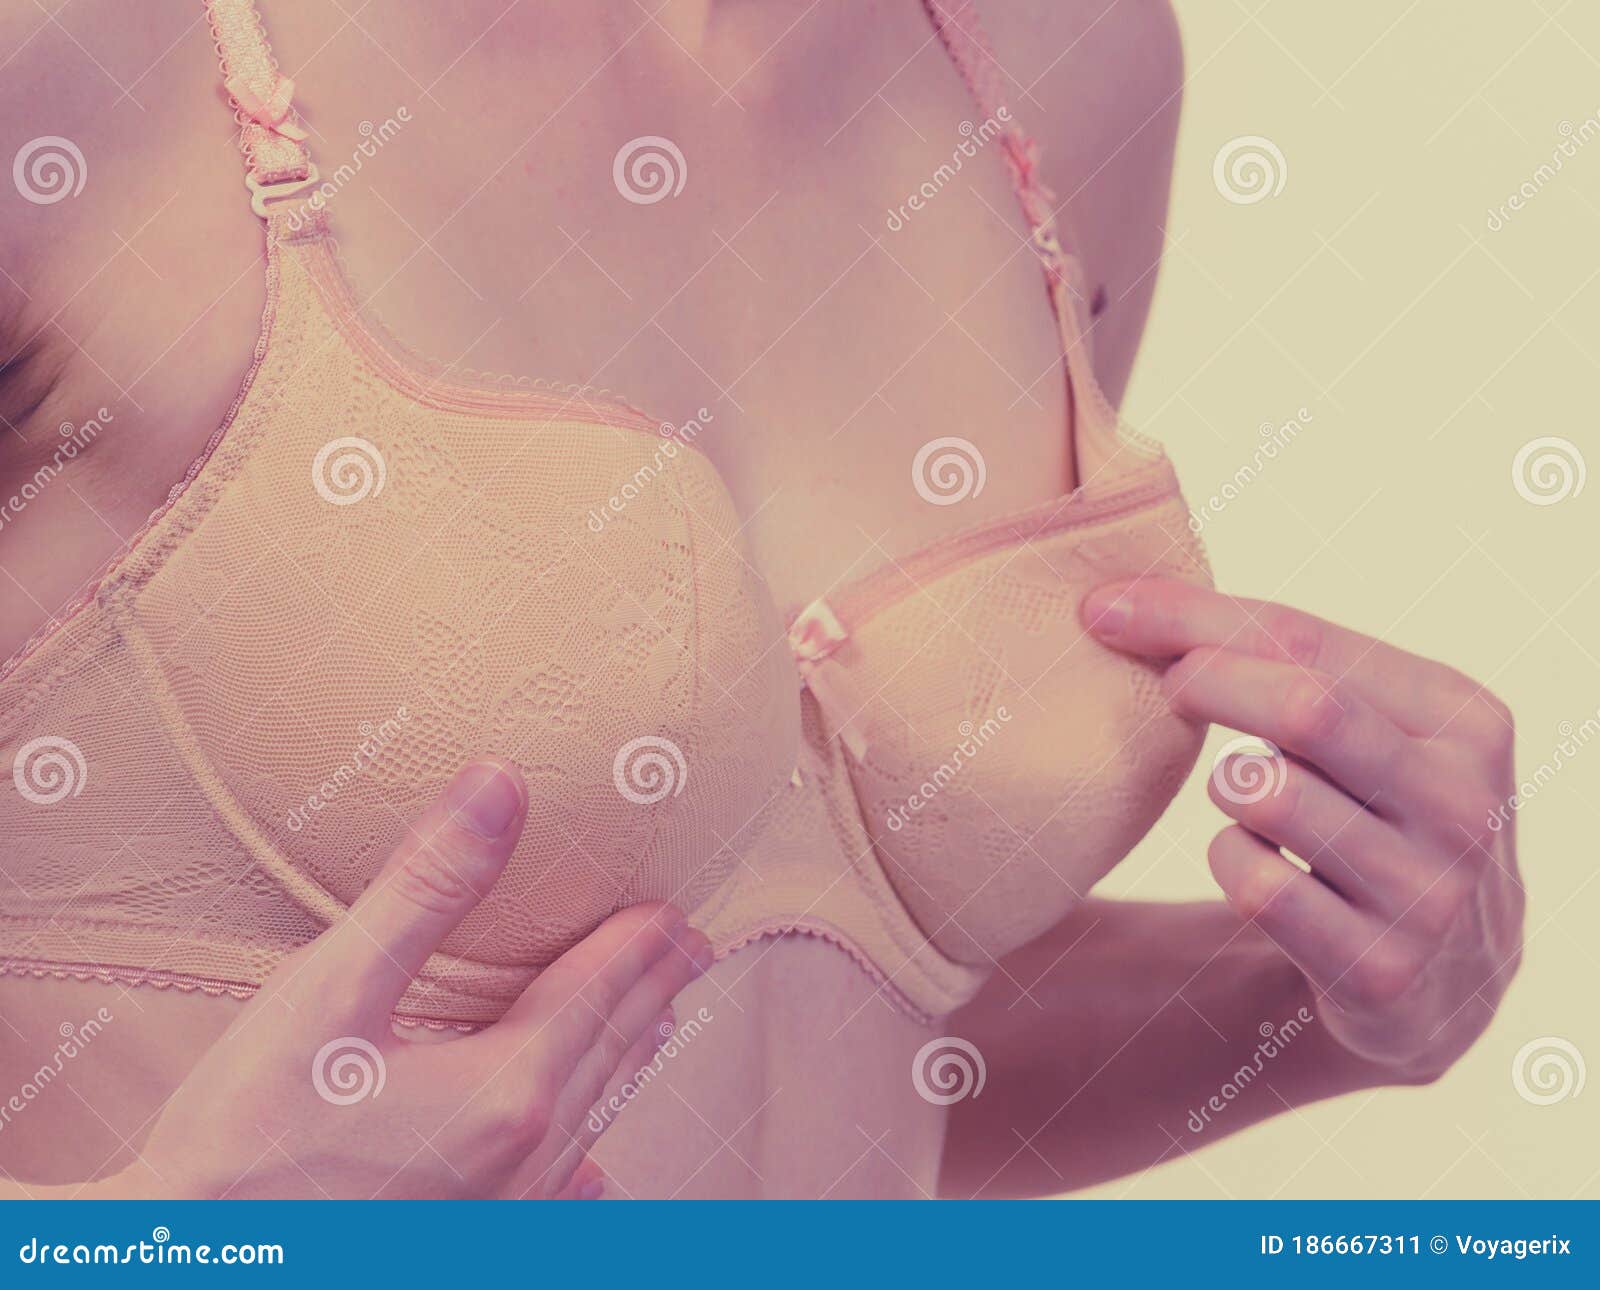 Girl Wearing Too Big Bra Cup Stock Image - Image of underwear